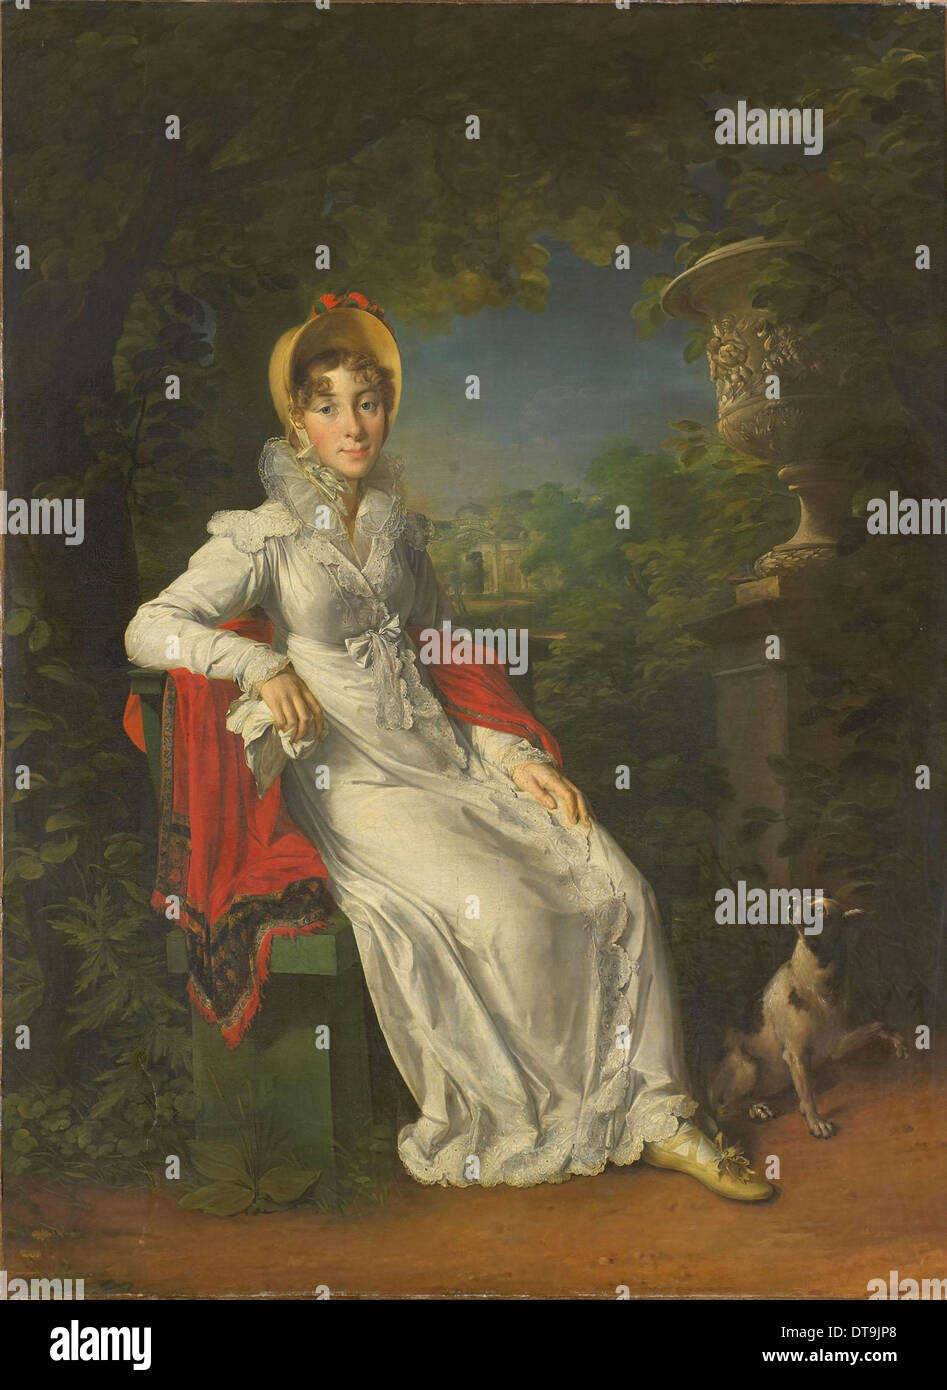 Carolina Bonaparte (1782-1839), regina di Napoli e di Sicilia, nel Bois de Boulogne, 1820-1830. Artista: Gérard, François Pascal Simon (1770-1837) Foto Stock